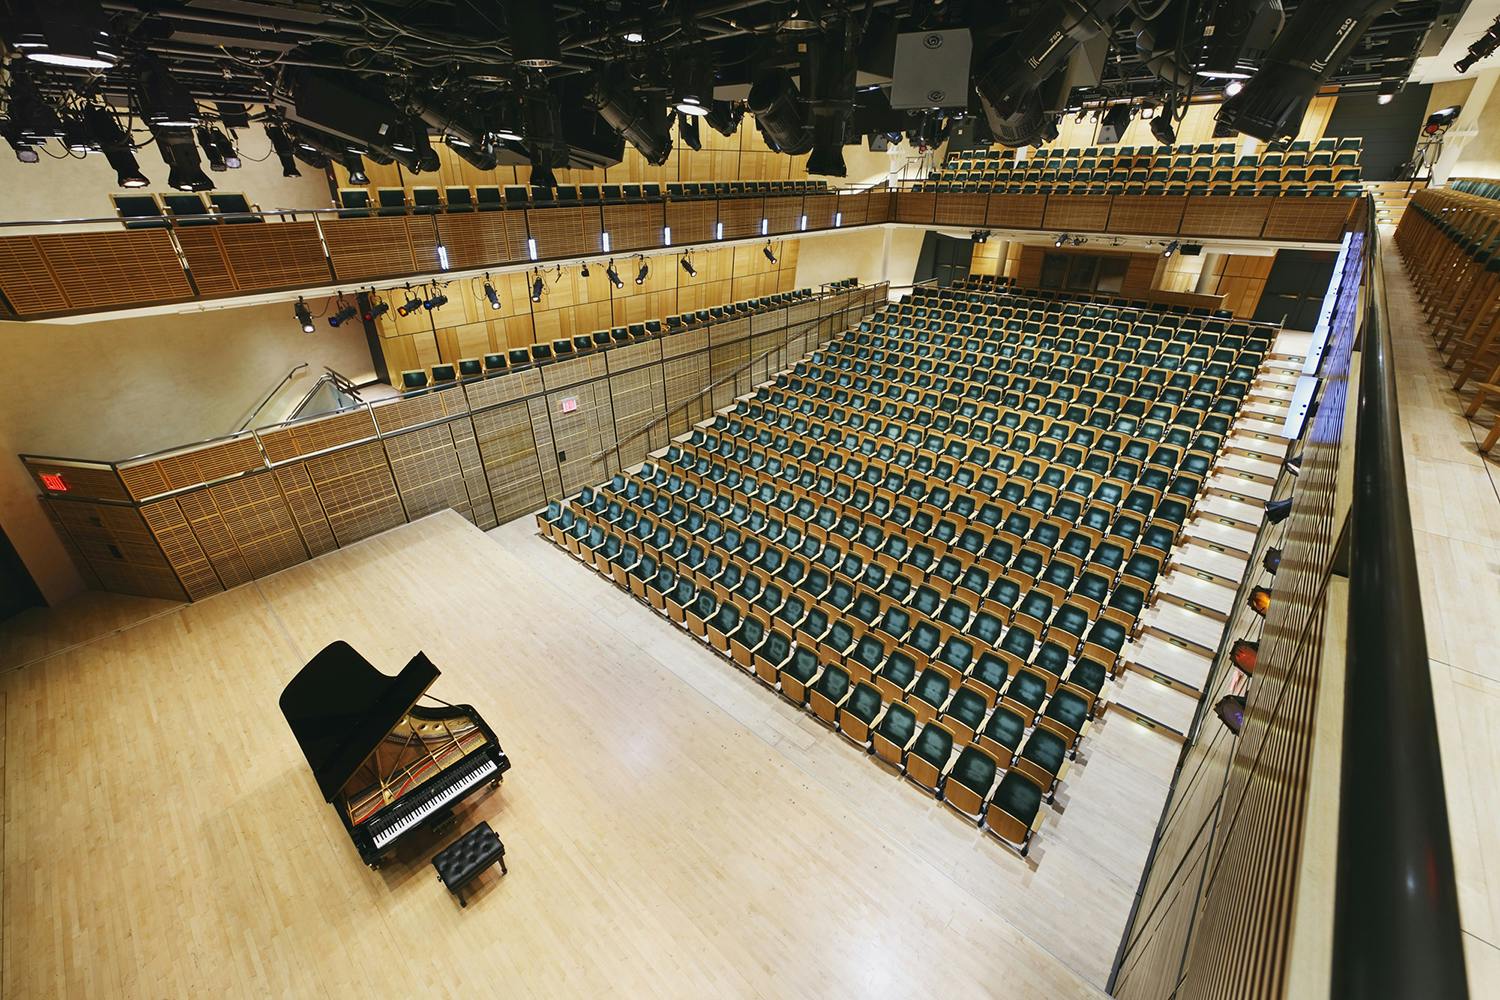 carnegie hall stern auditorium seating